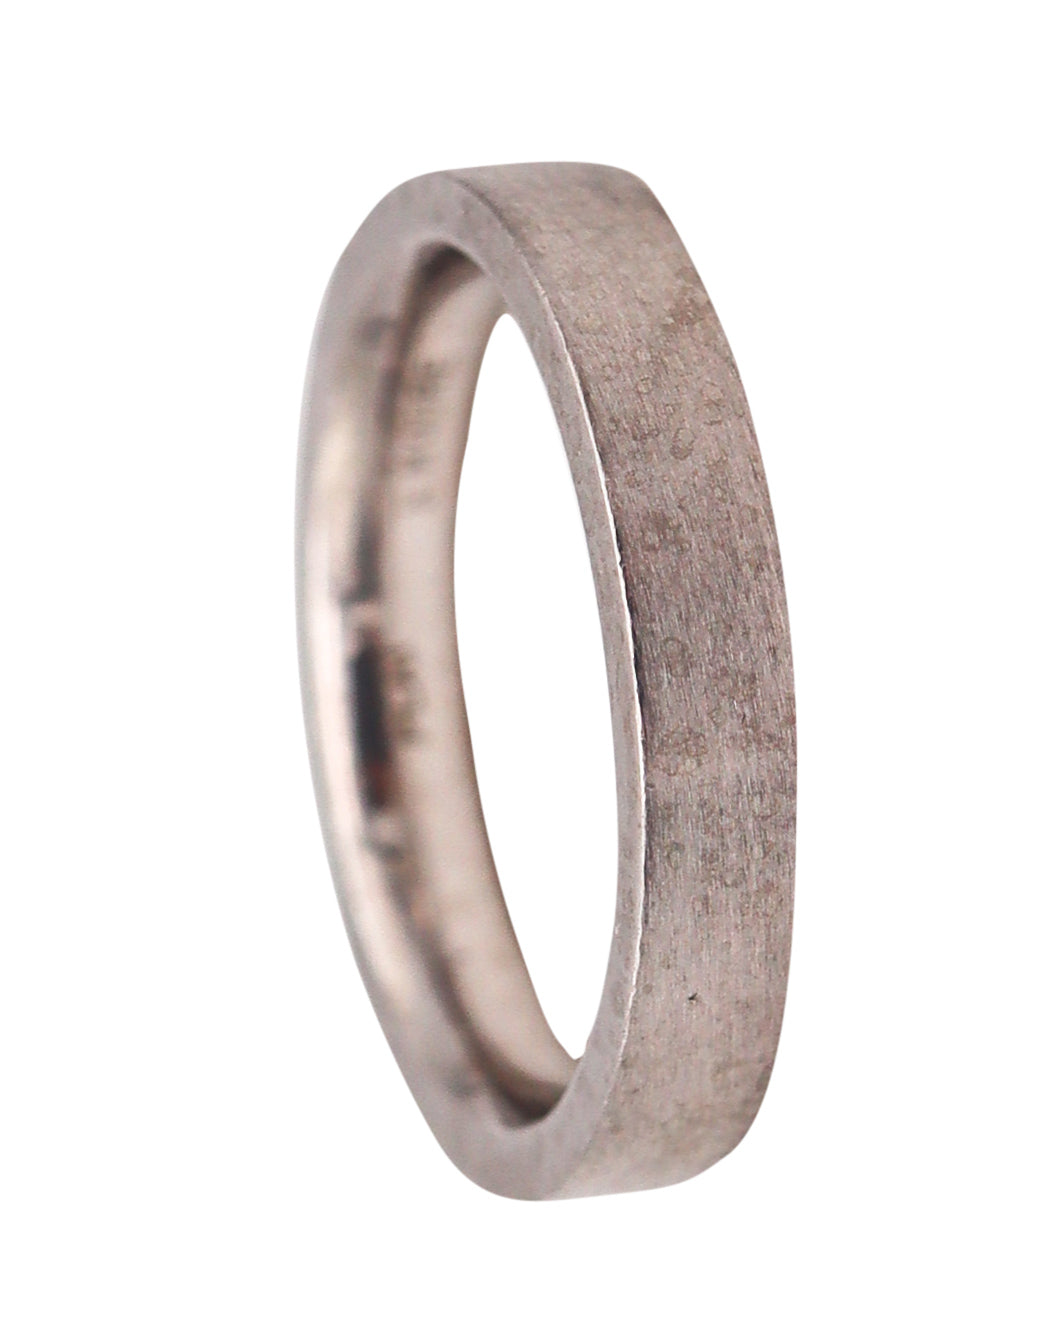 Stuart Moore Bauhaus Geometric Wedding Band Ring In Solid .950 Platinum